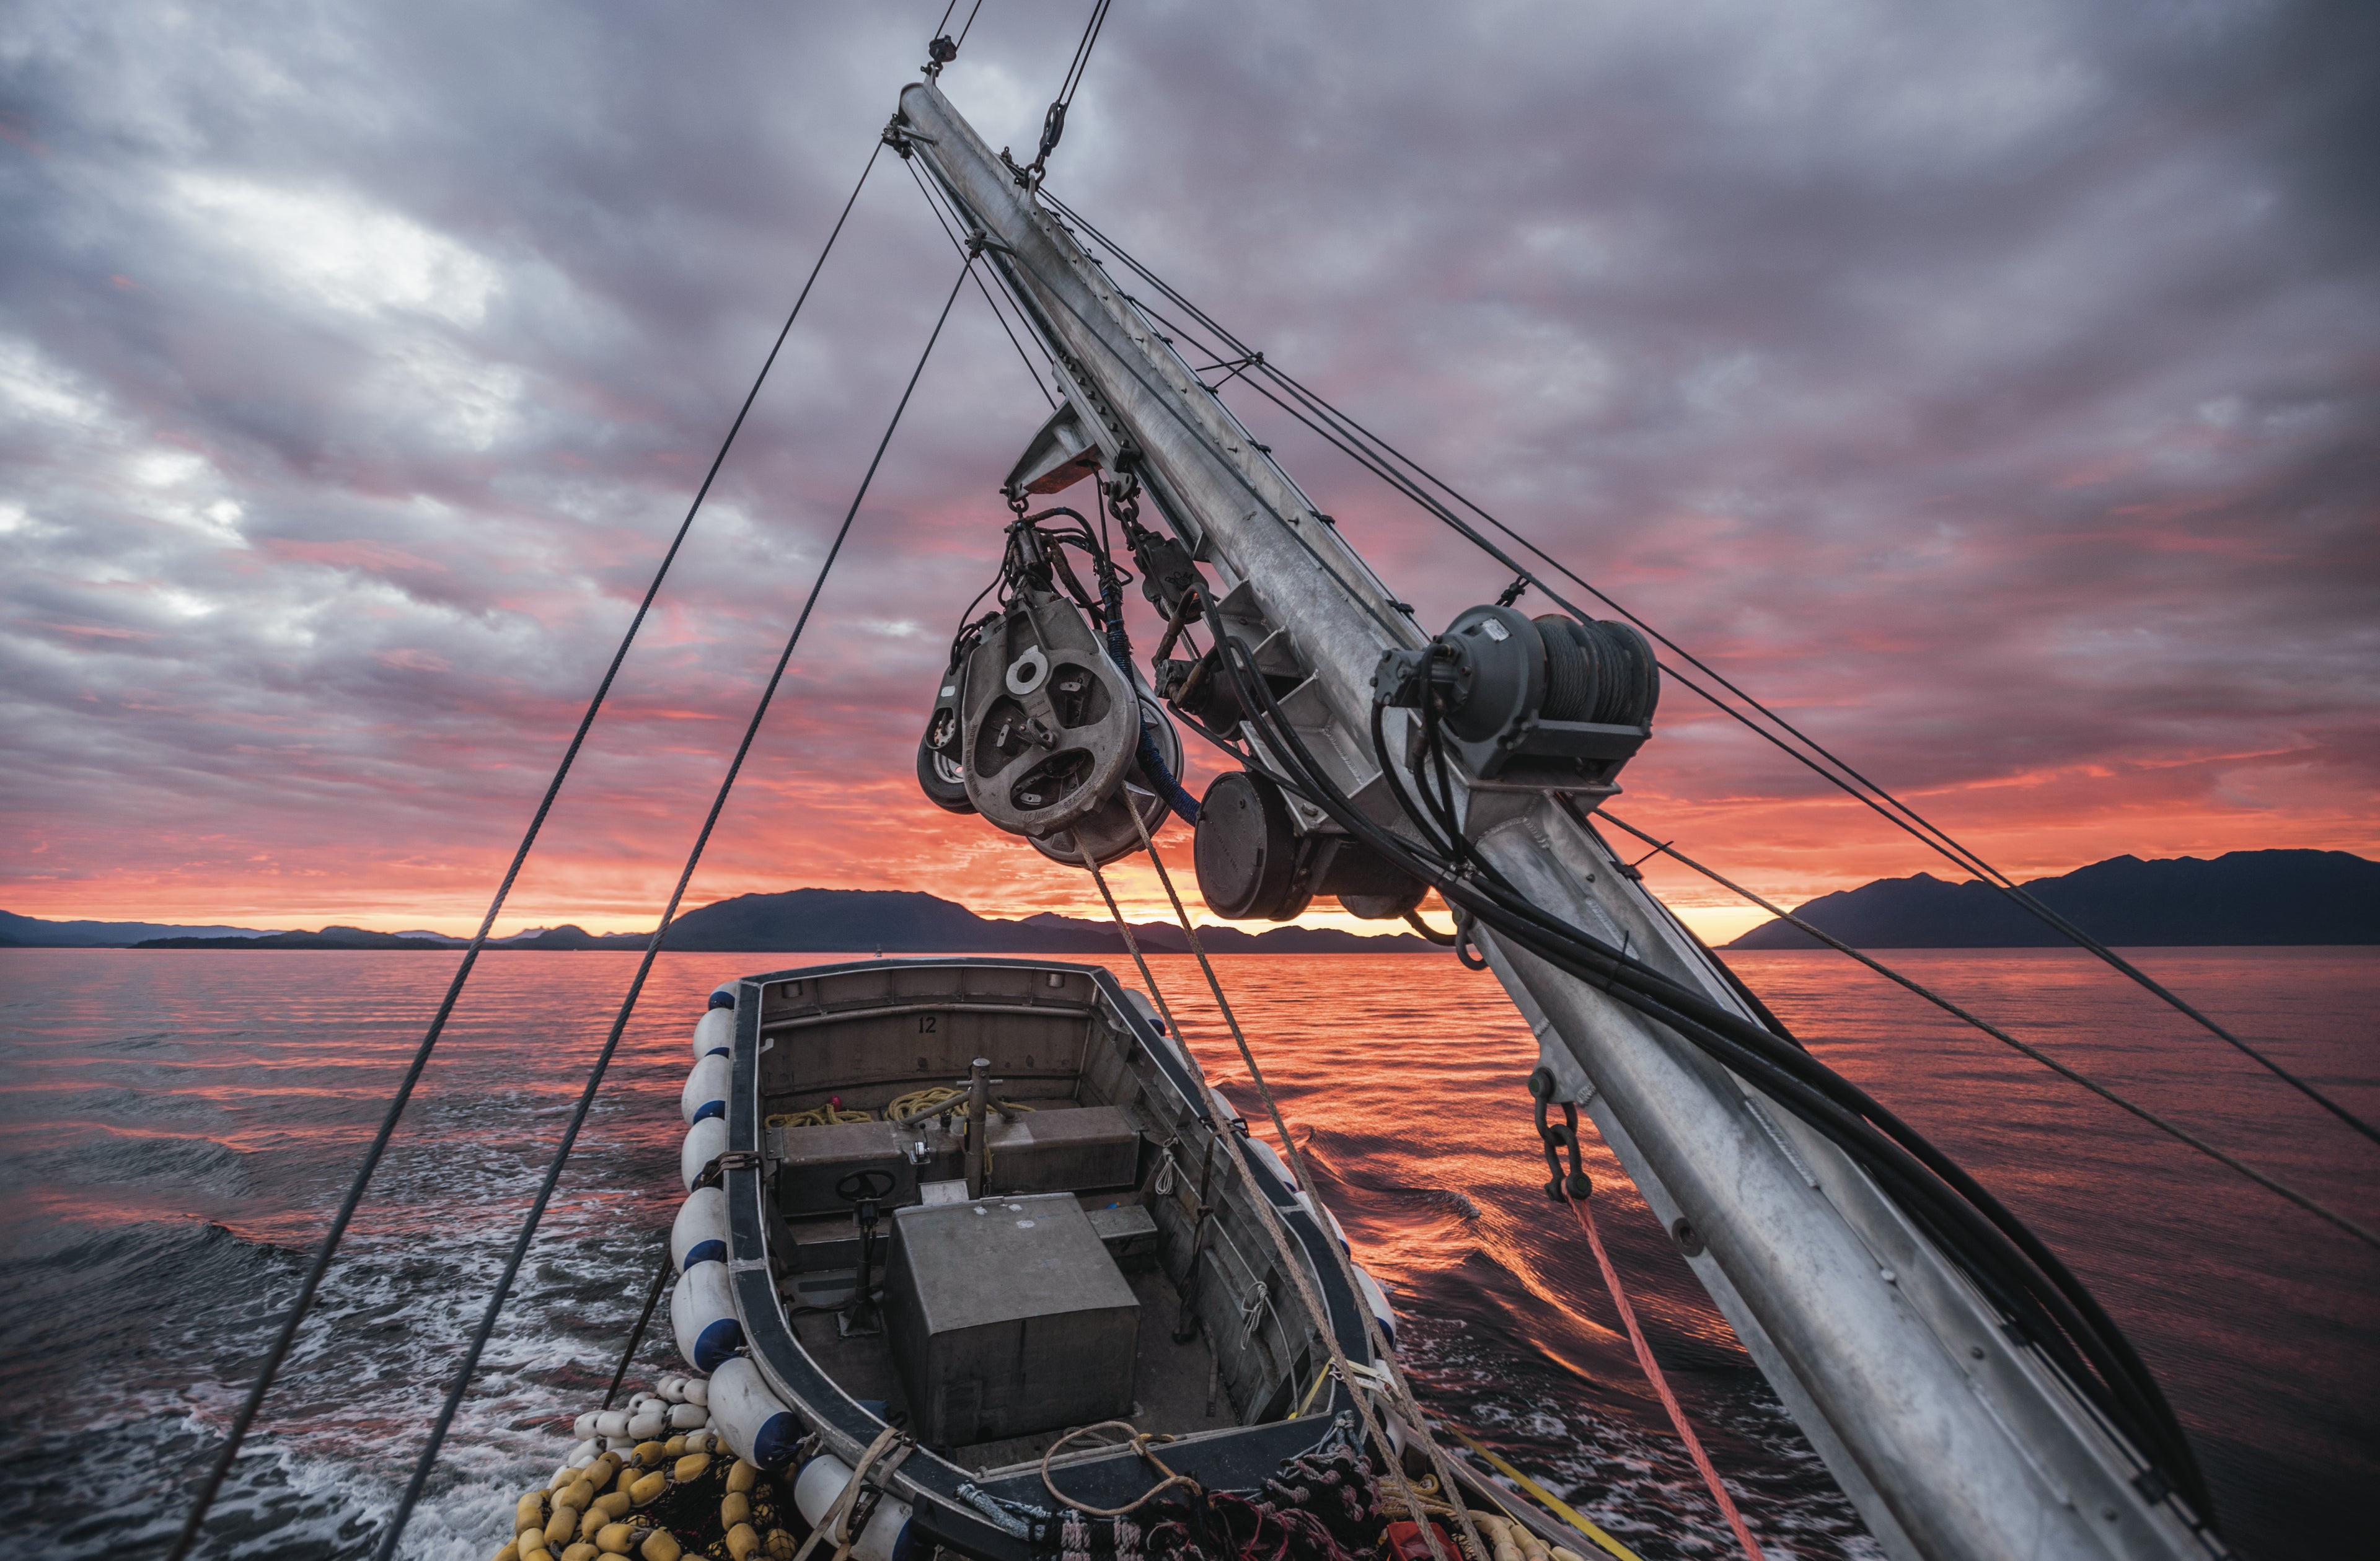 Sunrise on a salmon fishing boat in southeast Alaska